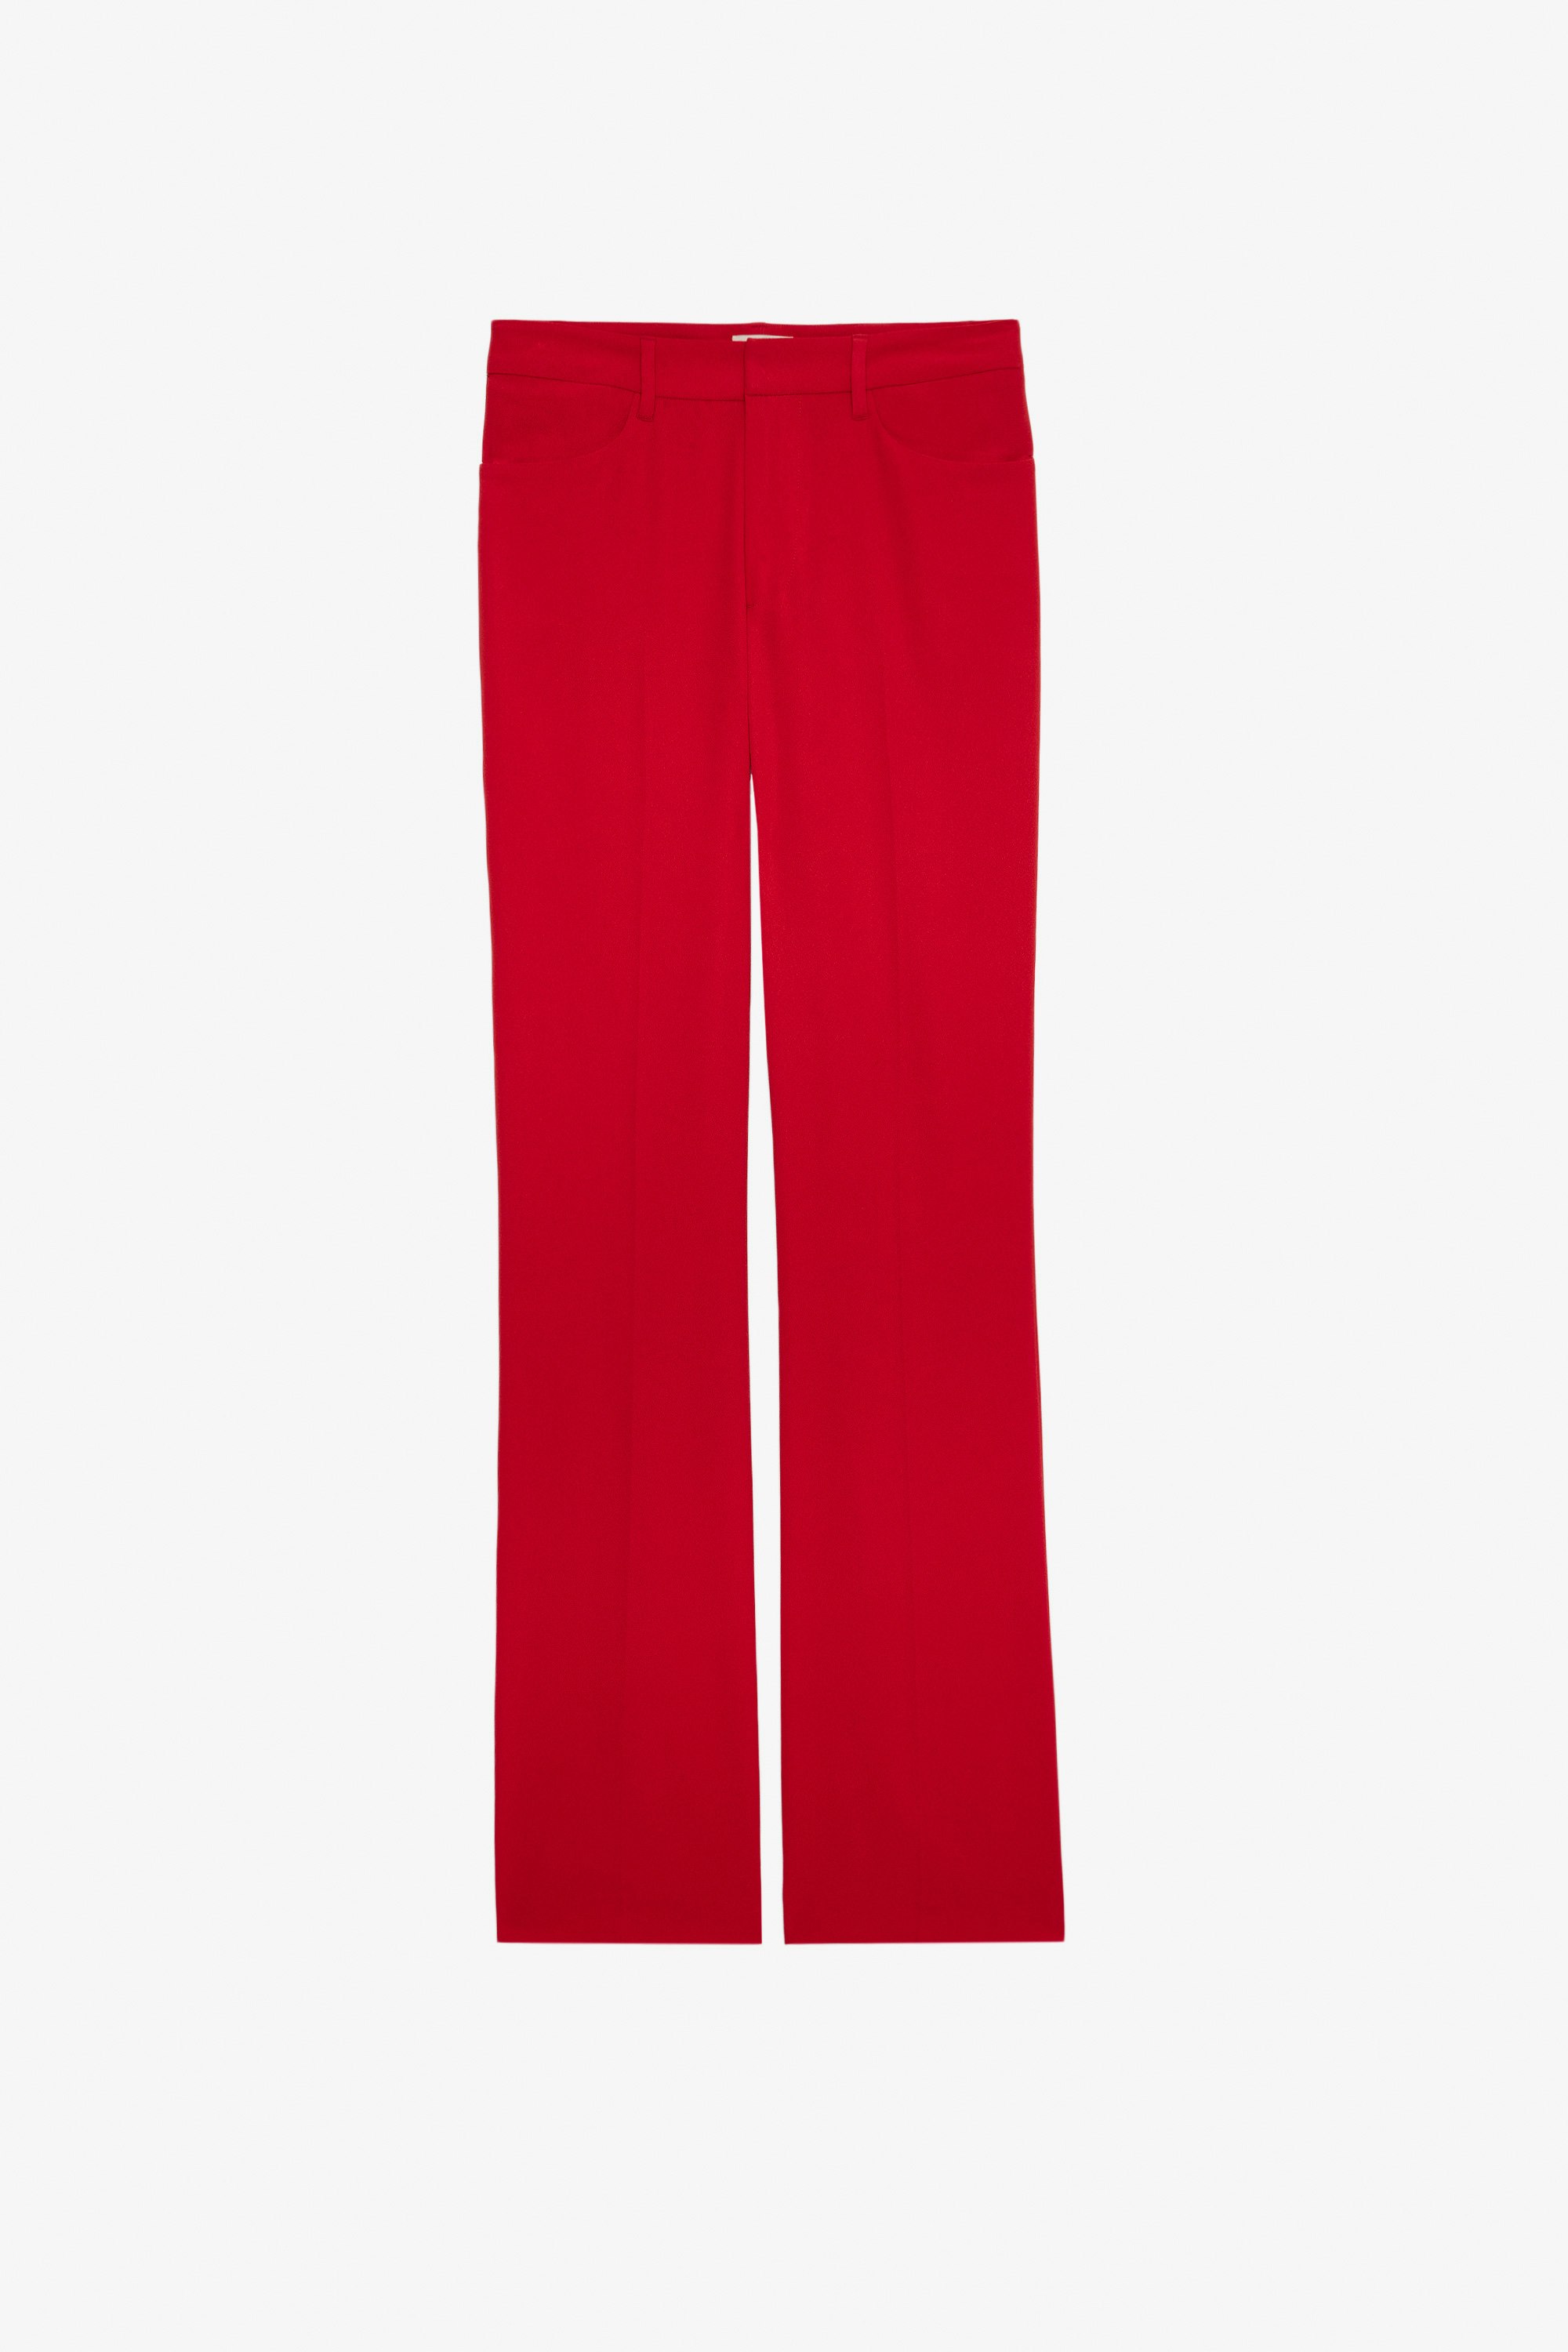 Pantaloni Pistol Pantaloni da tailleur in crêpe rosso da donna.